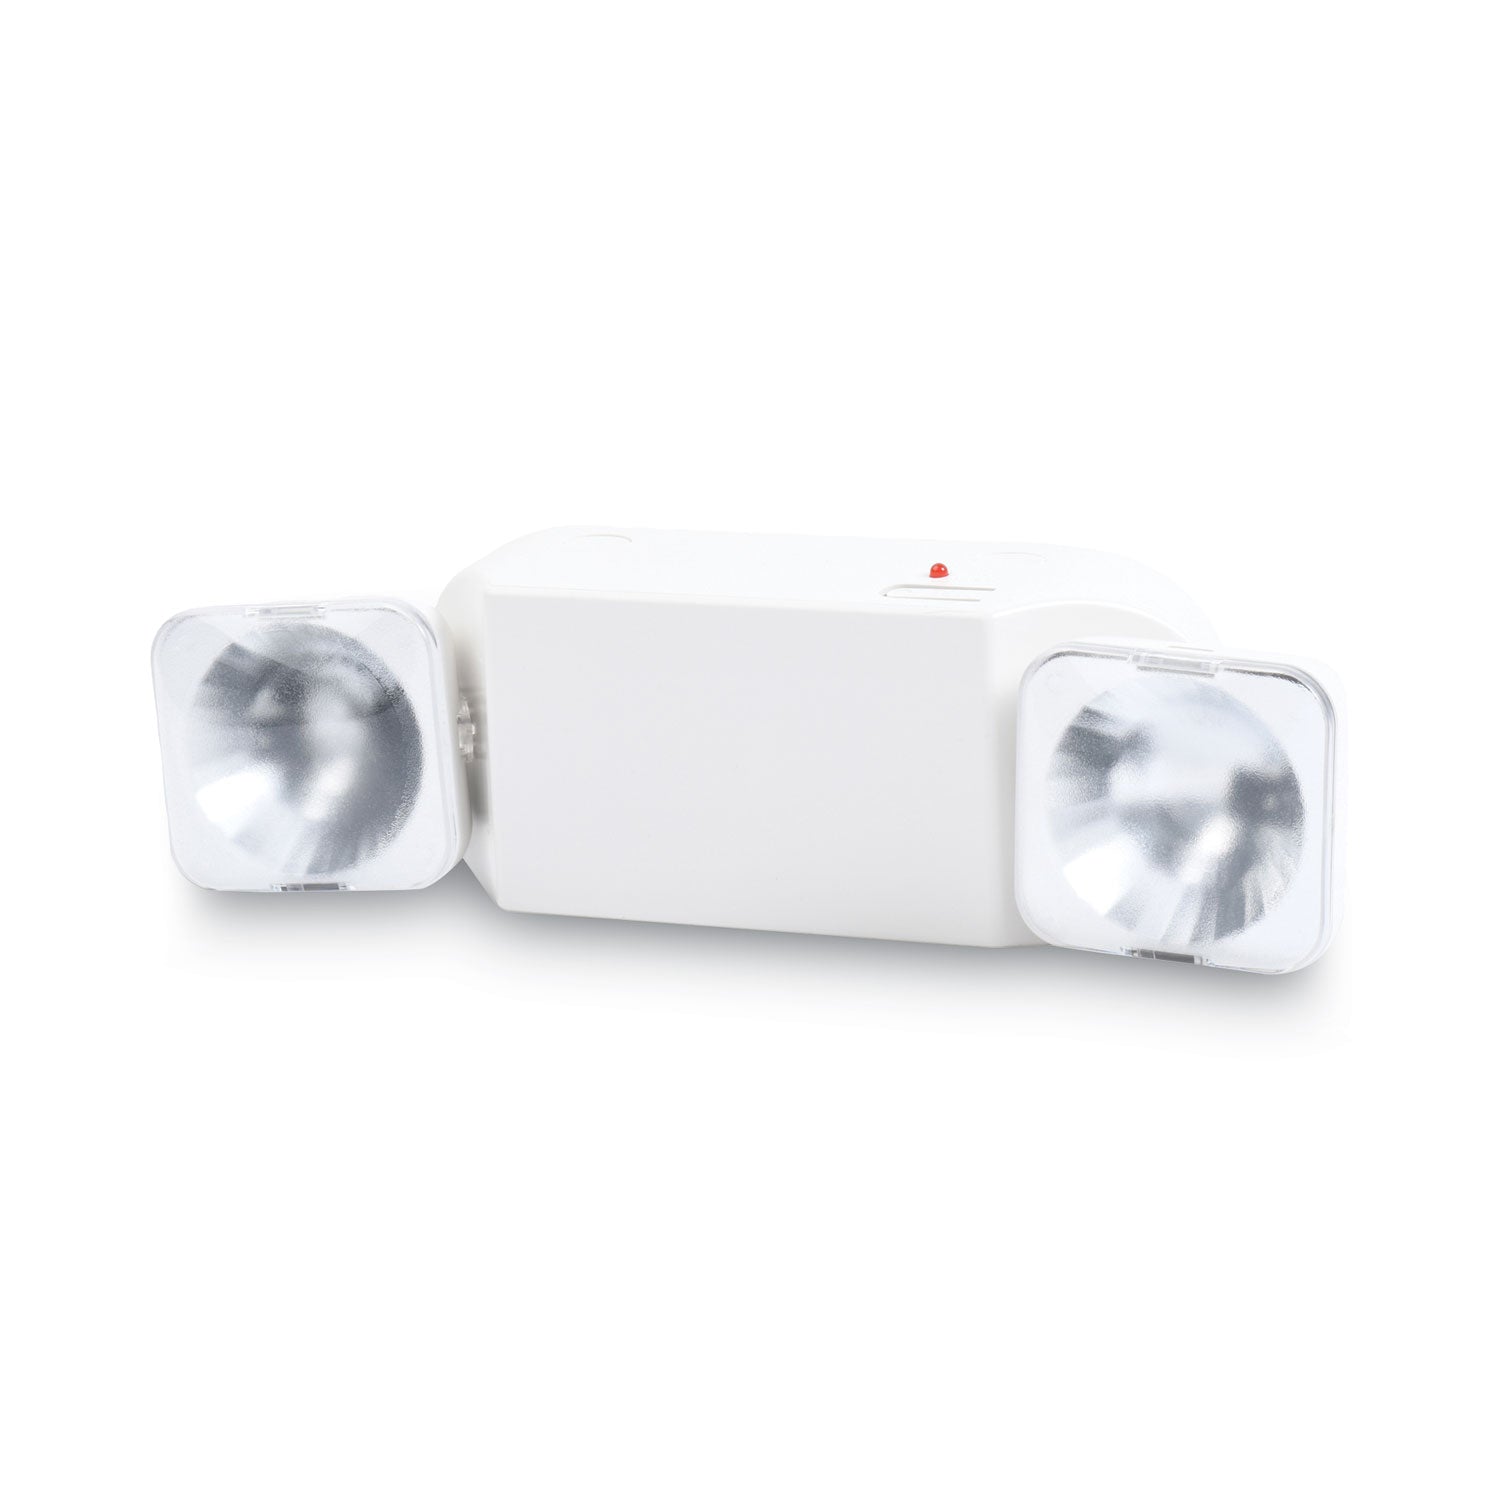 Swivel Head Twin Beam Emergency Lighting Unit, 12.75w x 4d x 5.5"h, White - 